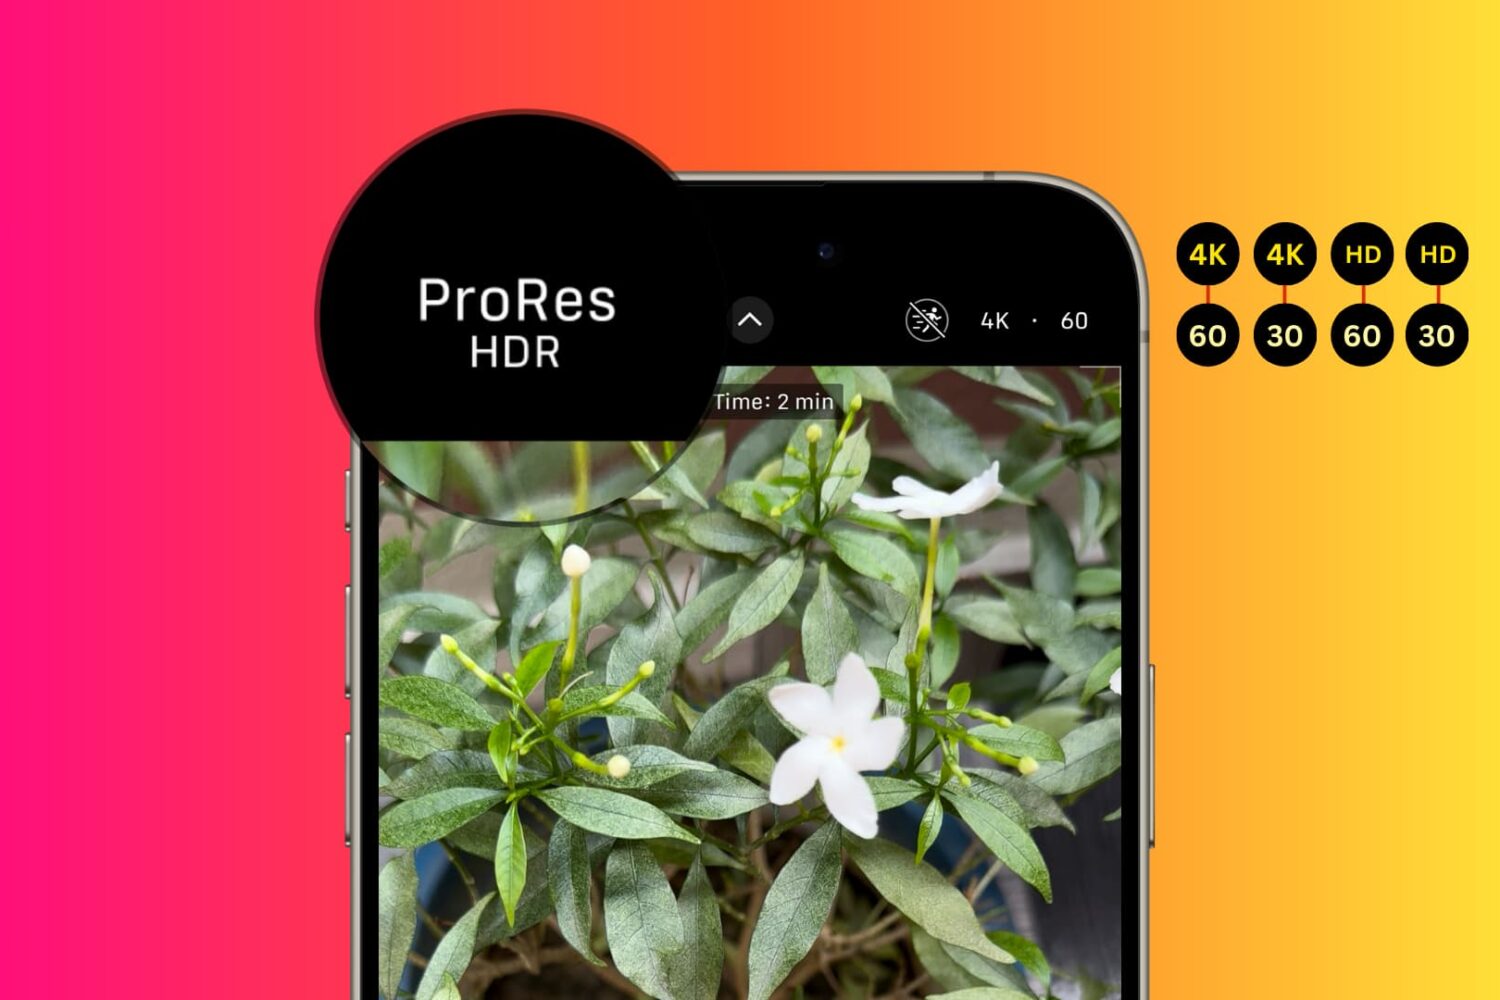 Recording ProRes video on iPhone